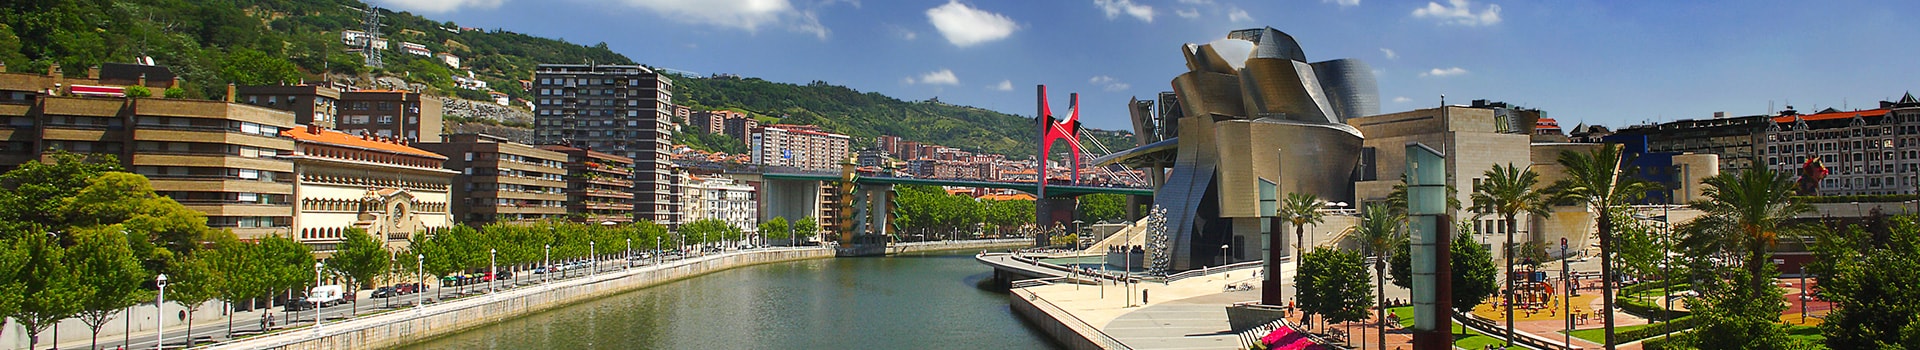 Manchester - Bilbao